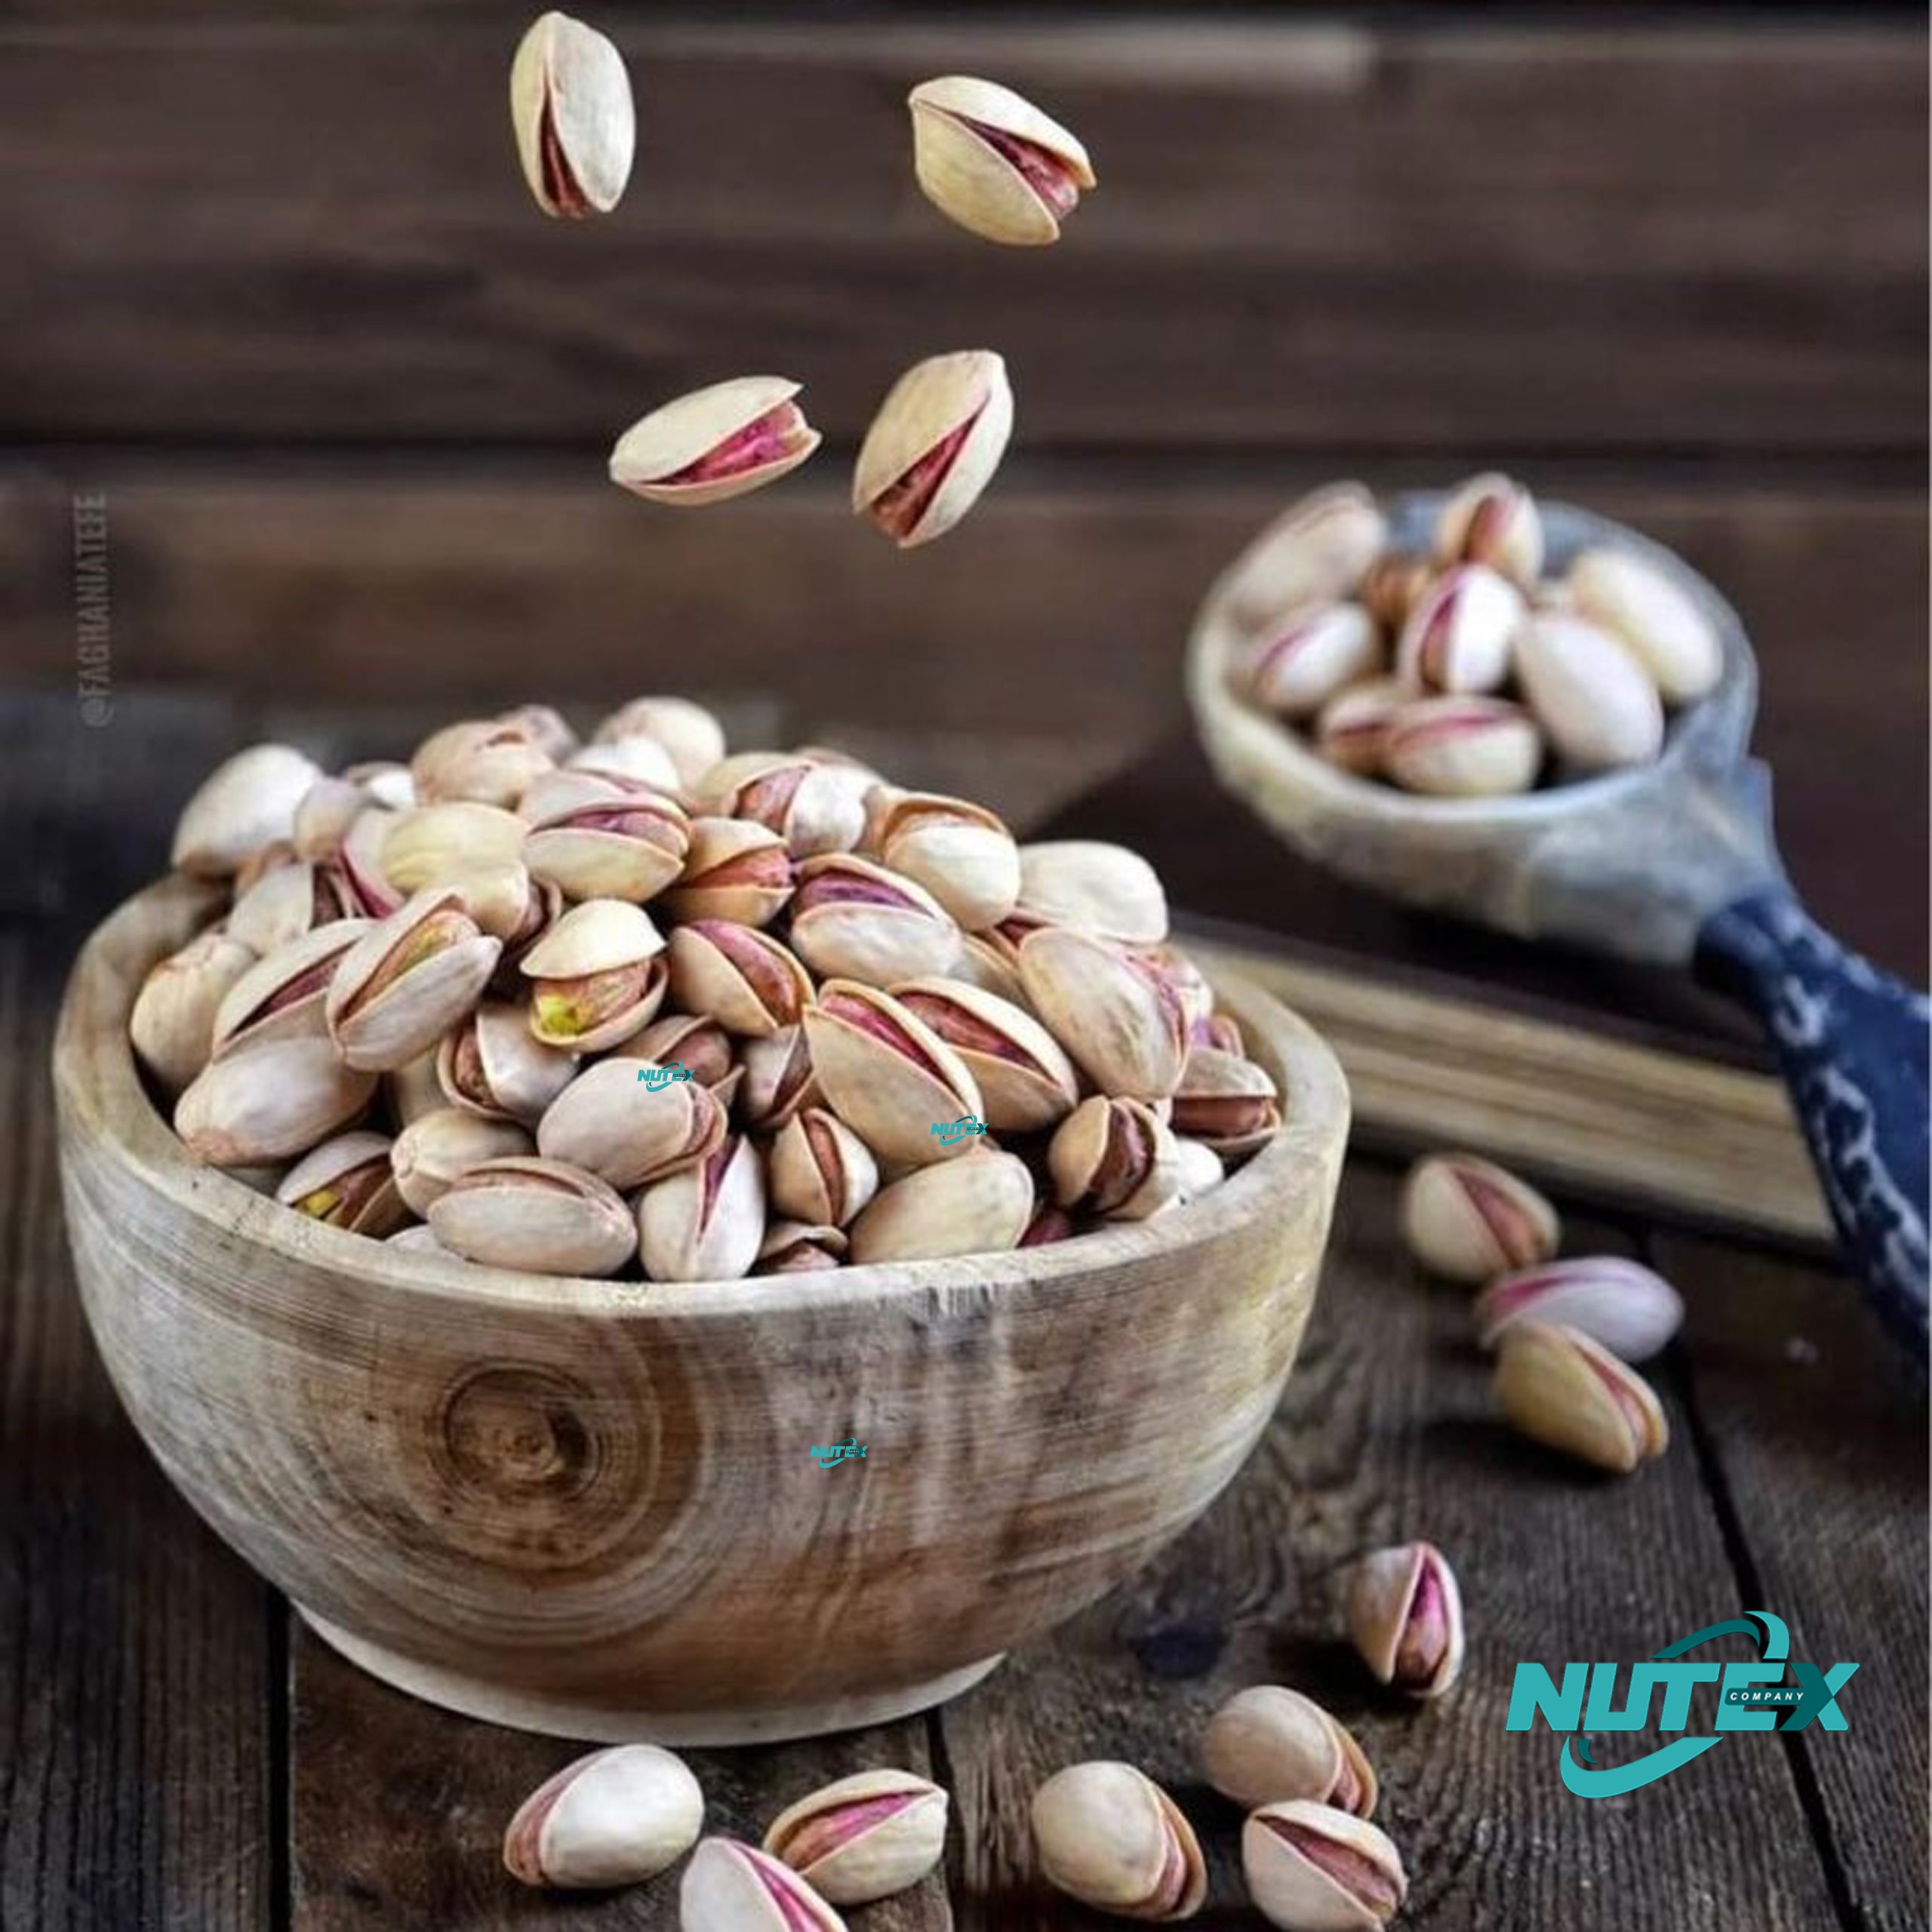 Direct purchase of Rafsanjan pistachios - Export Pistachio Sales Centers in Rafsanjan‚ Kerman - Nutex Company